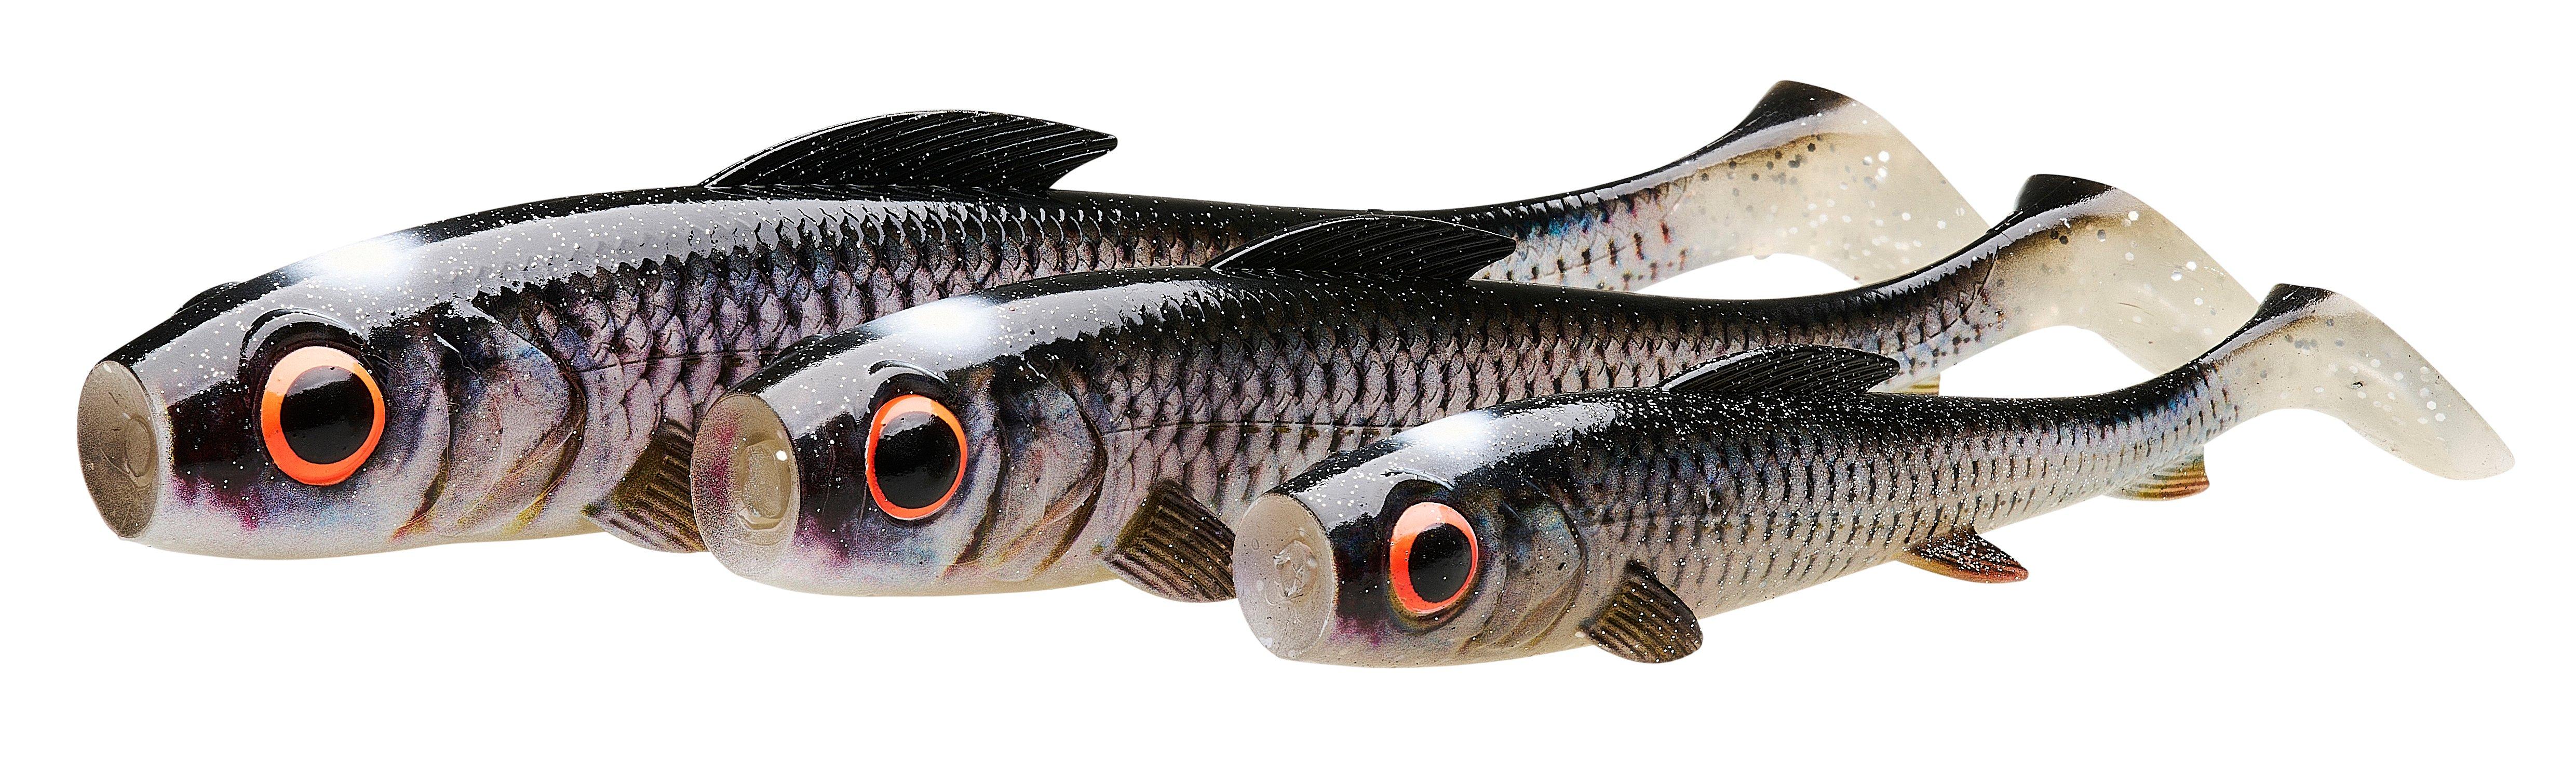 Catch More Fish Perch Combo – Berkley® EU